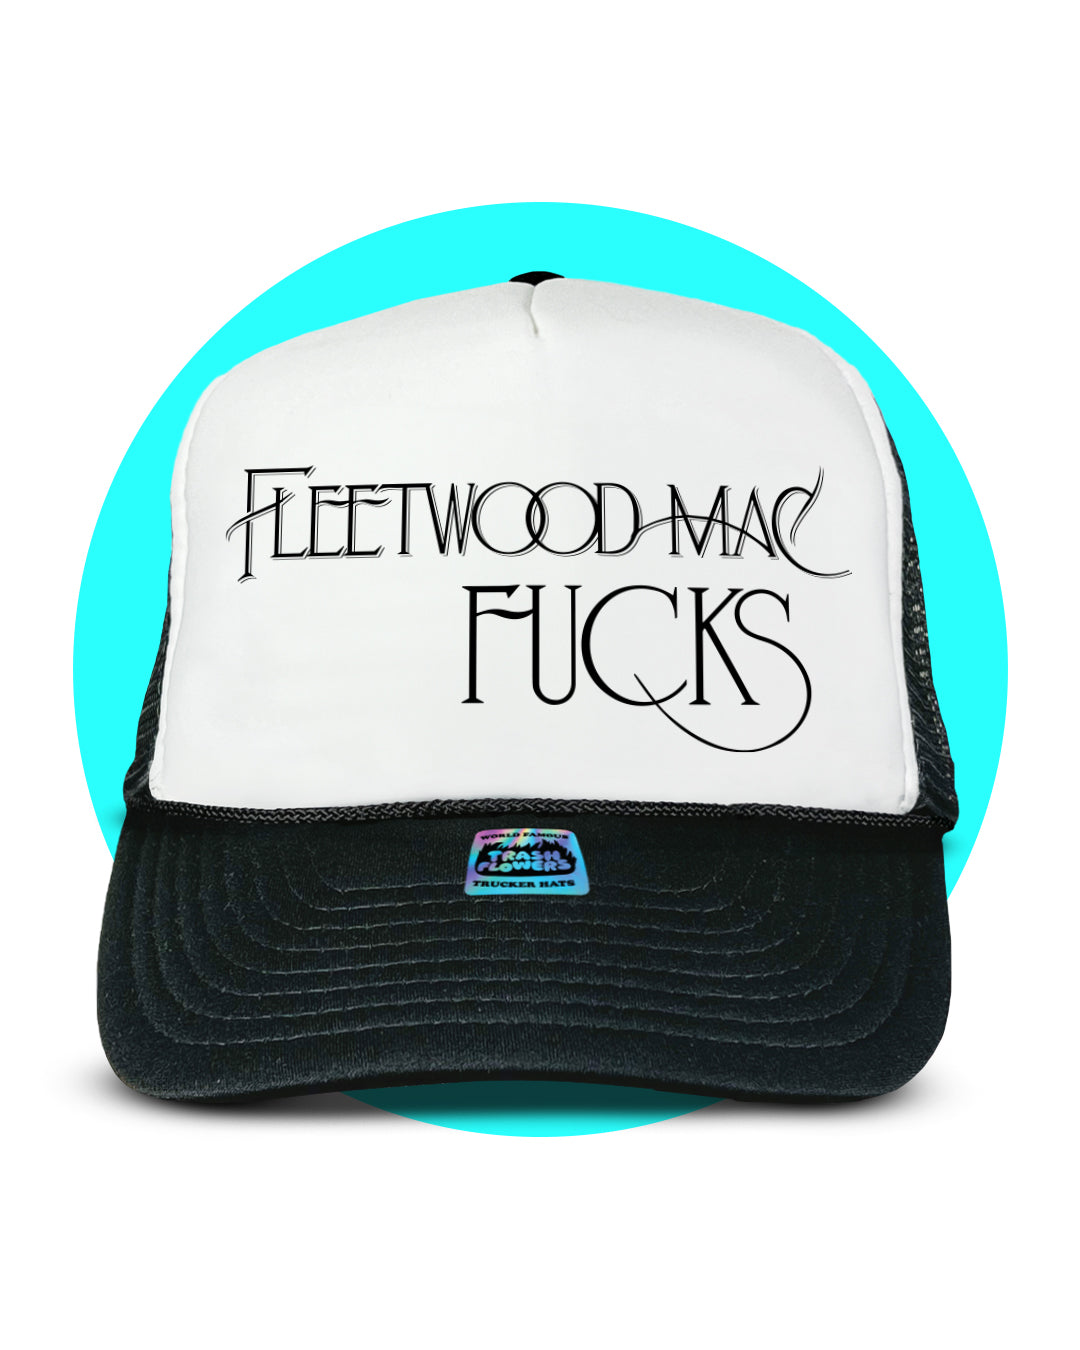 Fleetwood Mac Fucks Trucker Hat